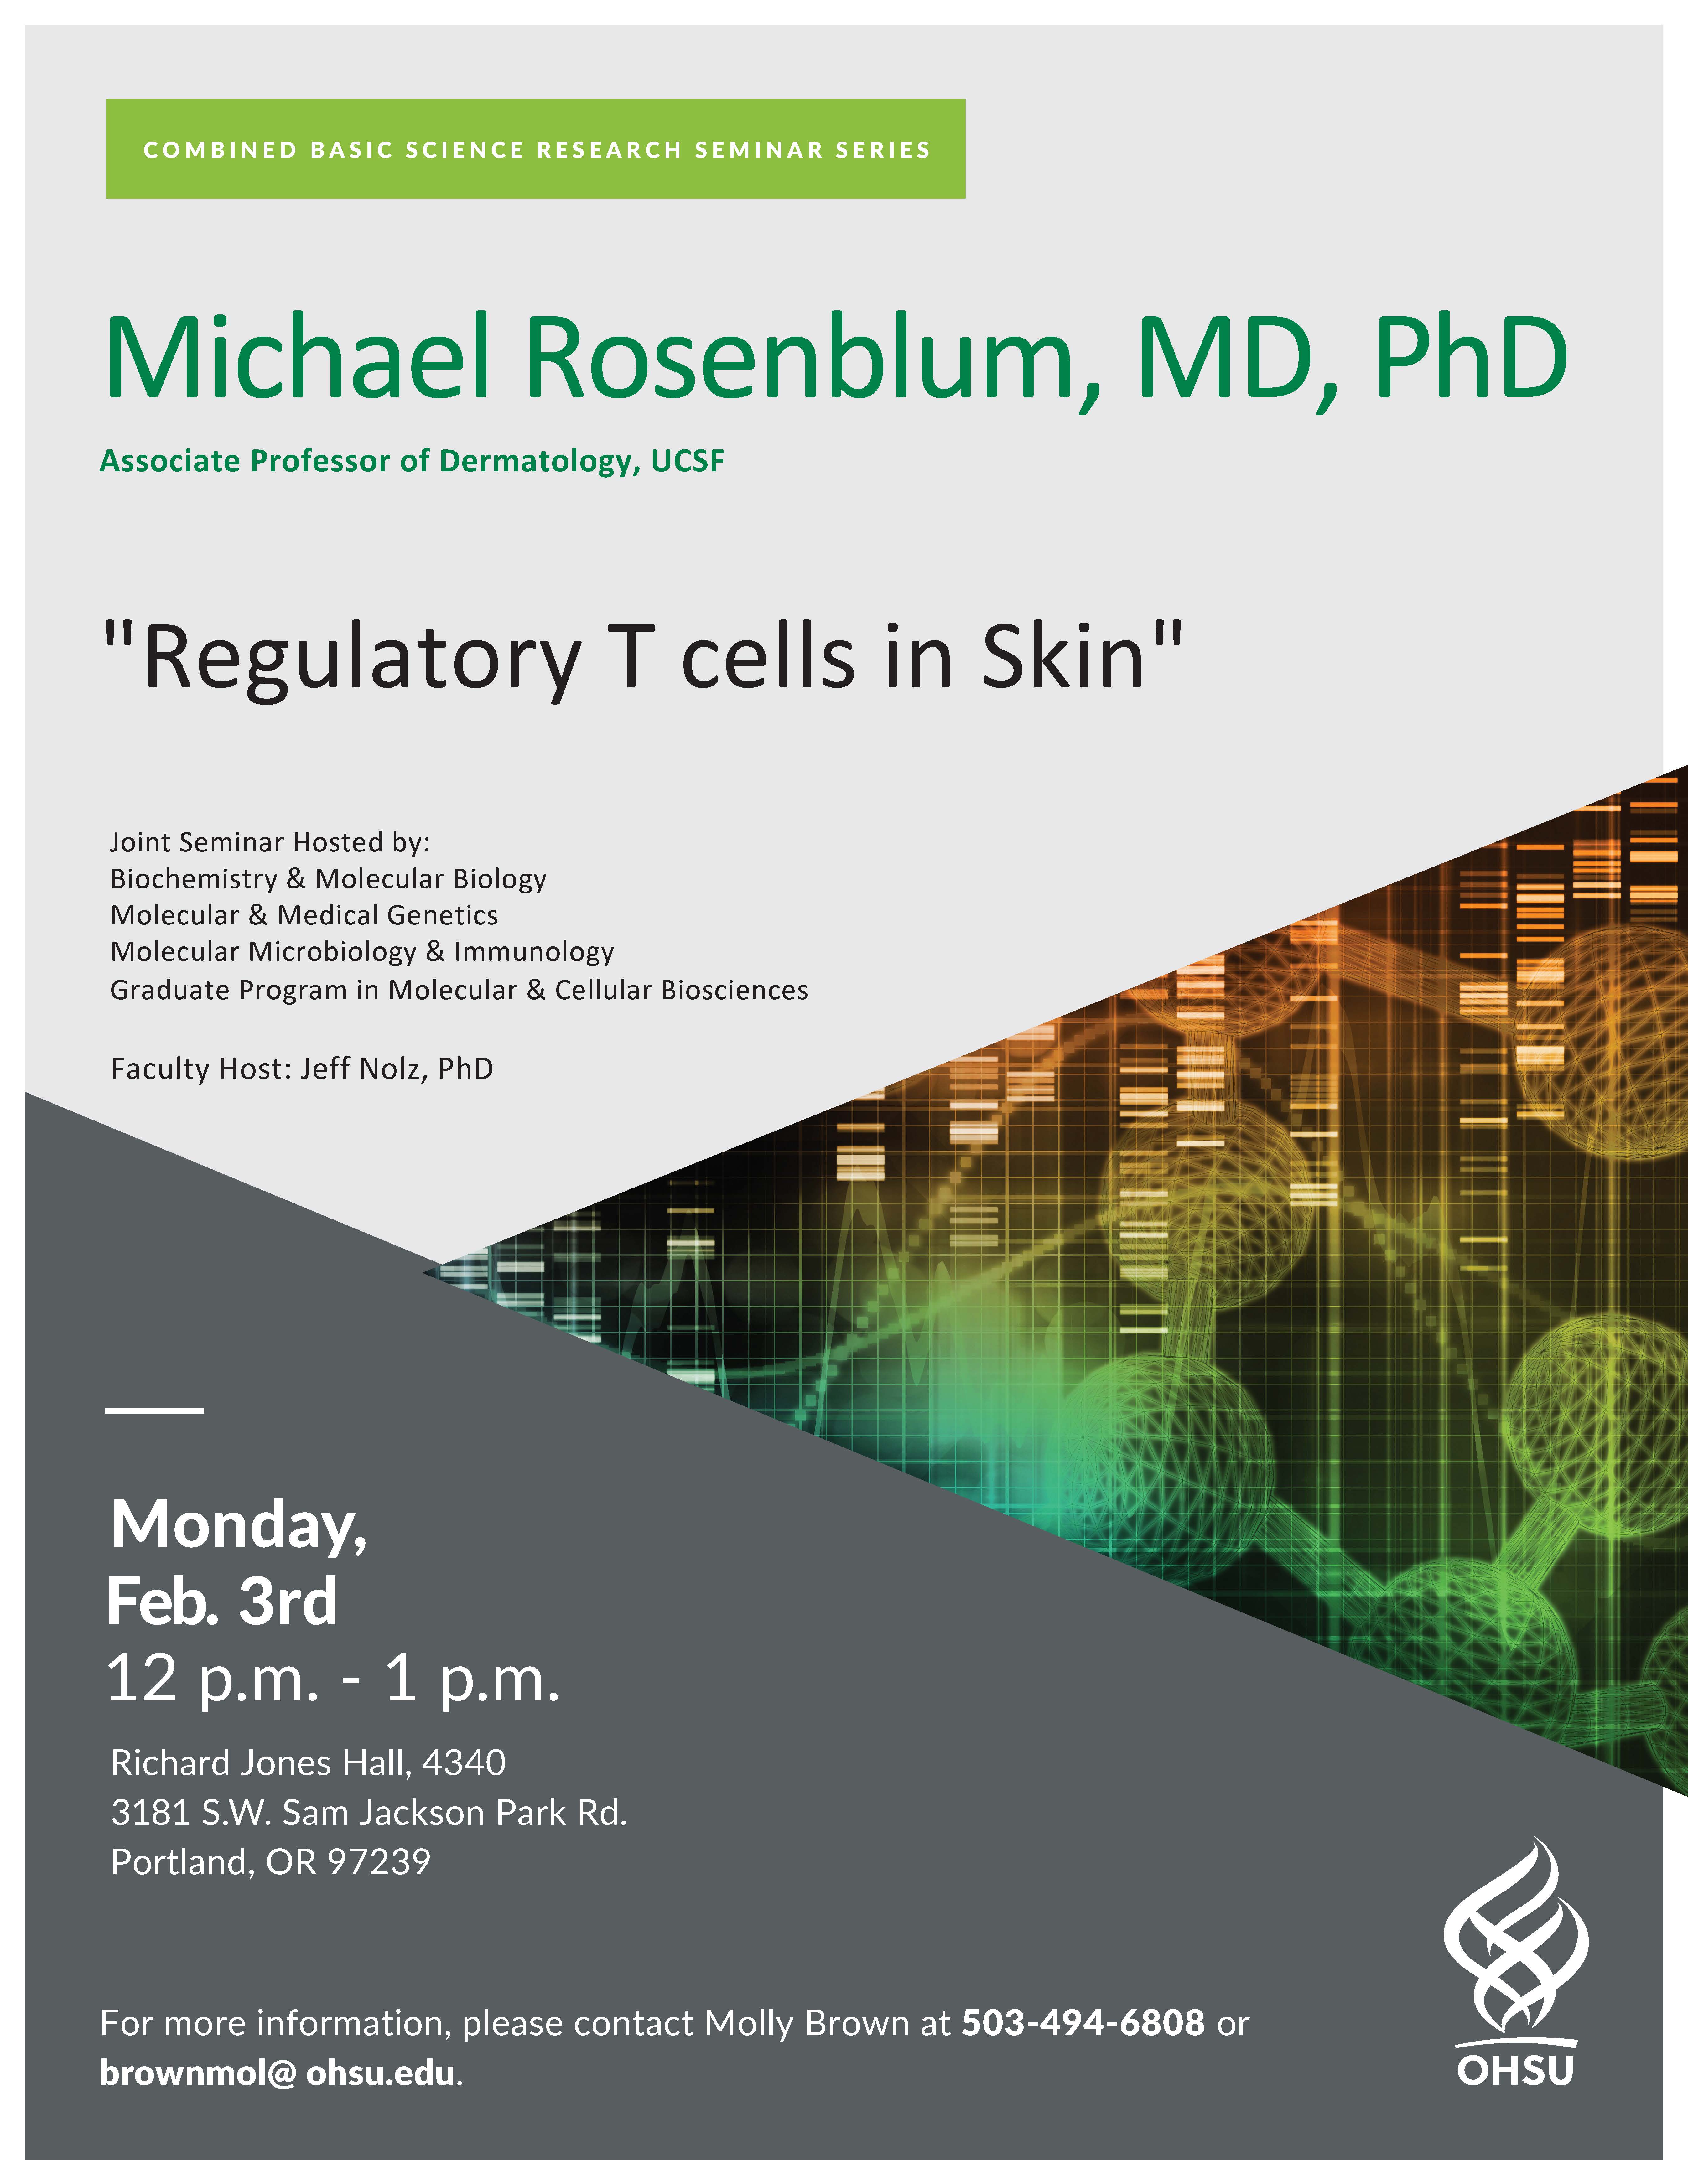 Dr. Rosenblum Seminar Flyer - 2-3-20